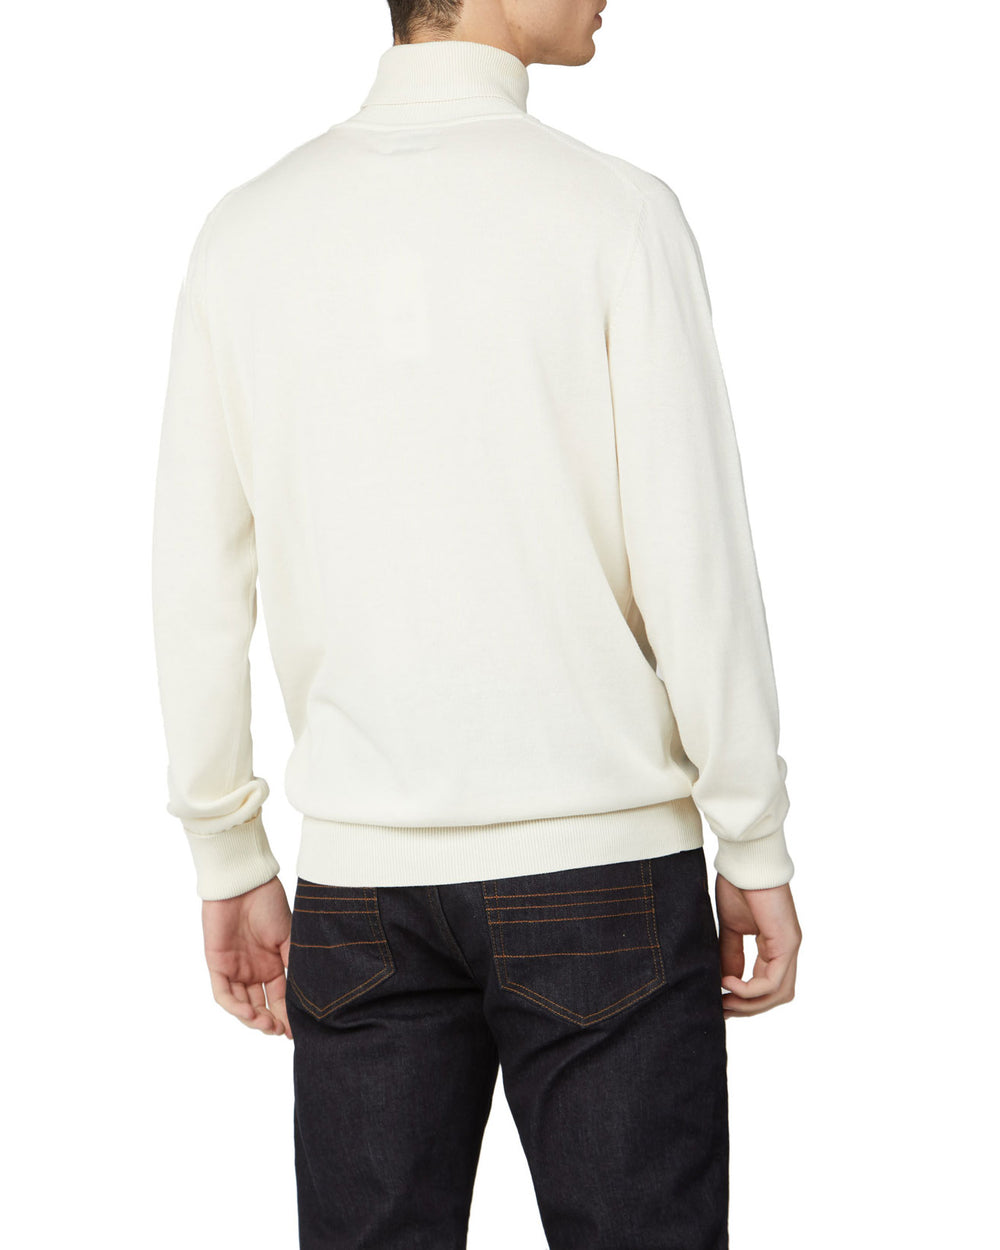 Signature Cotton Roll Neck Sweater - Ivory - Ben Sherman